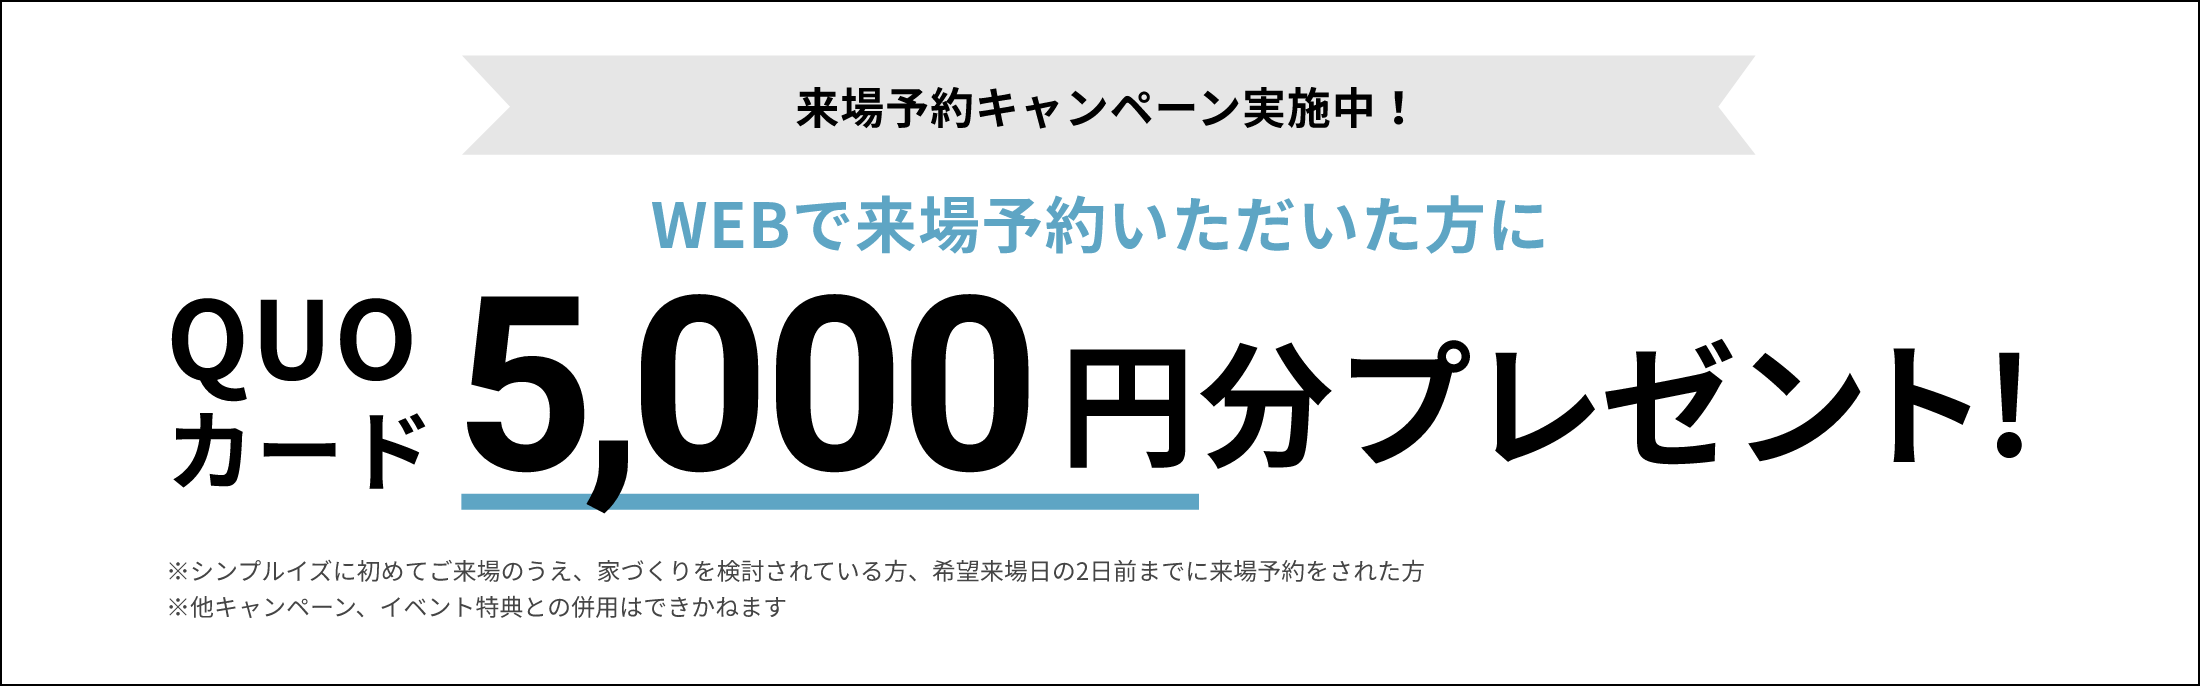 WEB予約限定 QUOカード5,000円分プレゼント!